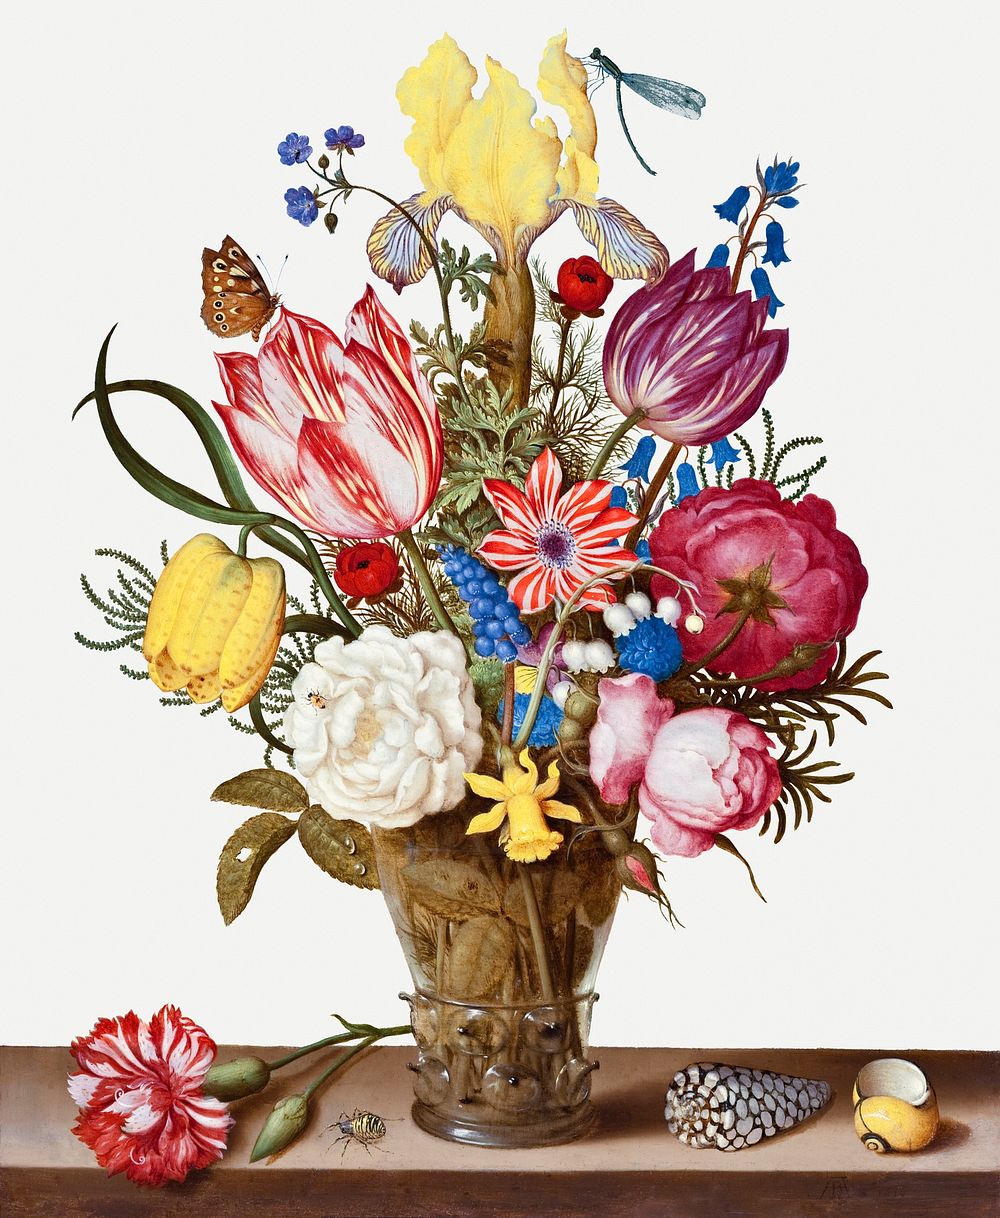 Vintage flower illustration, remix from artworks by Ambrosius Bosschaert